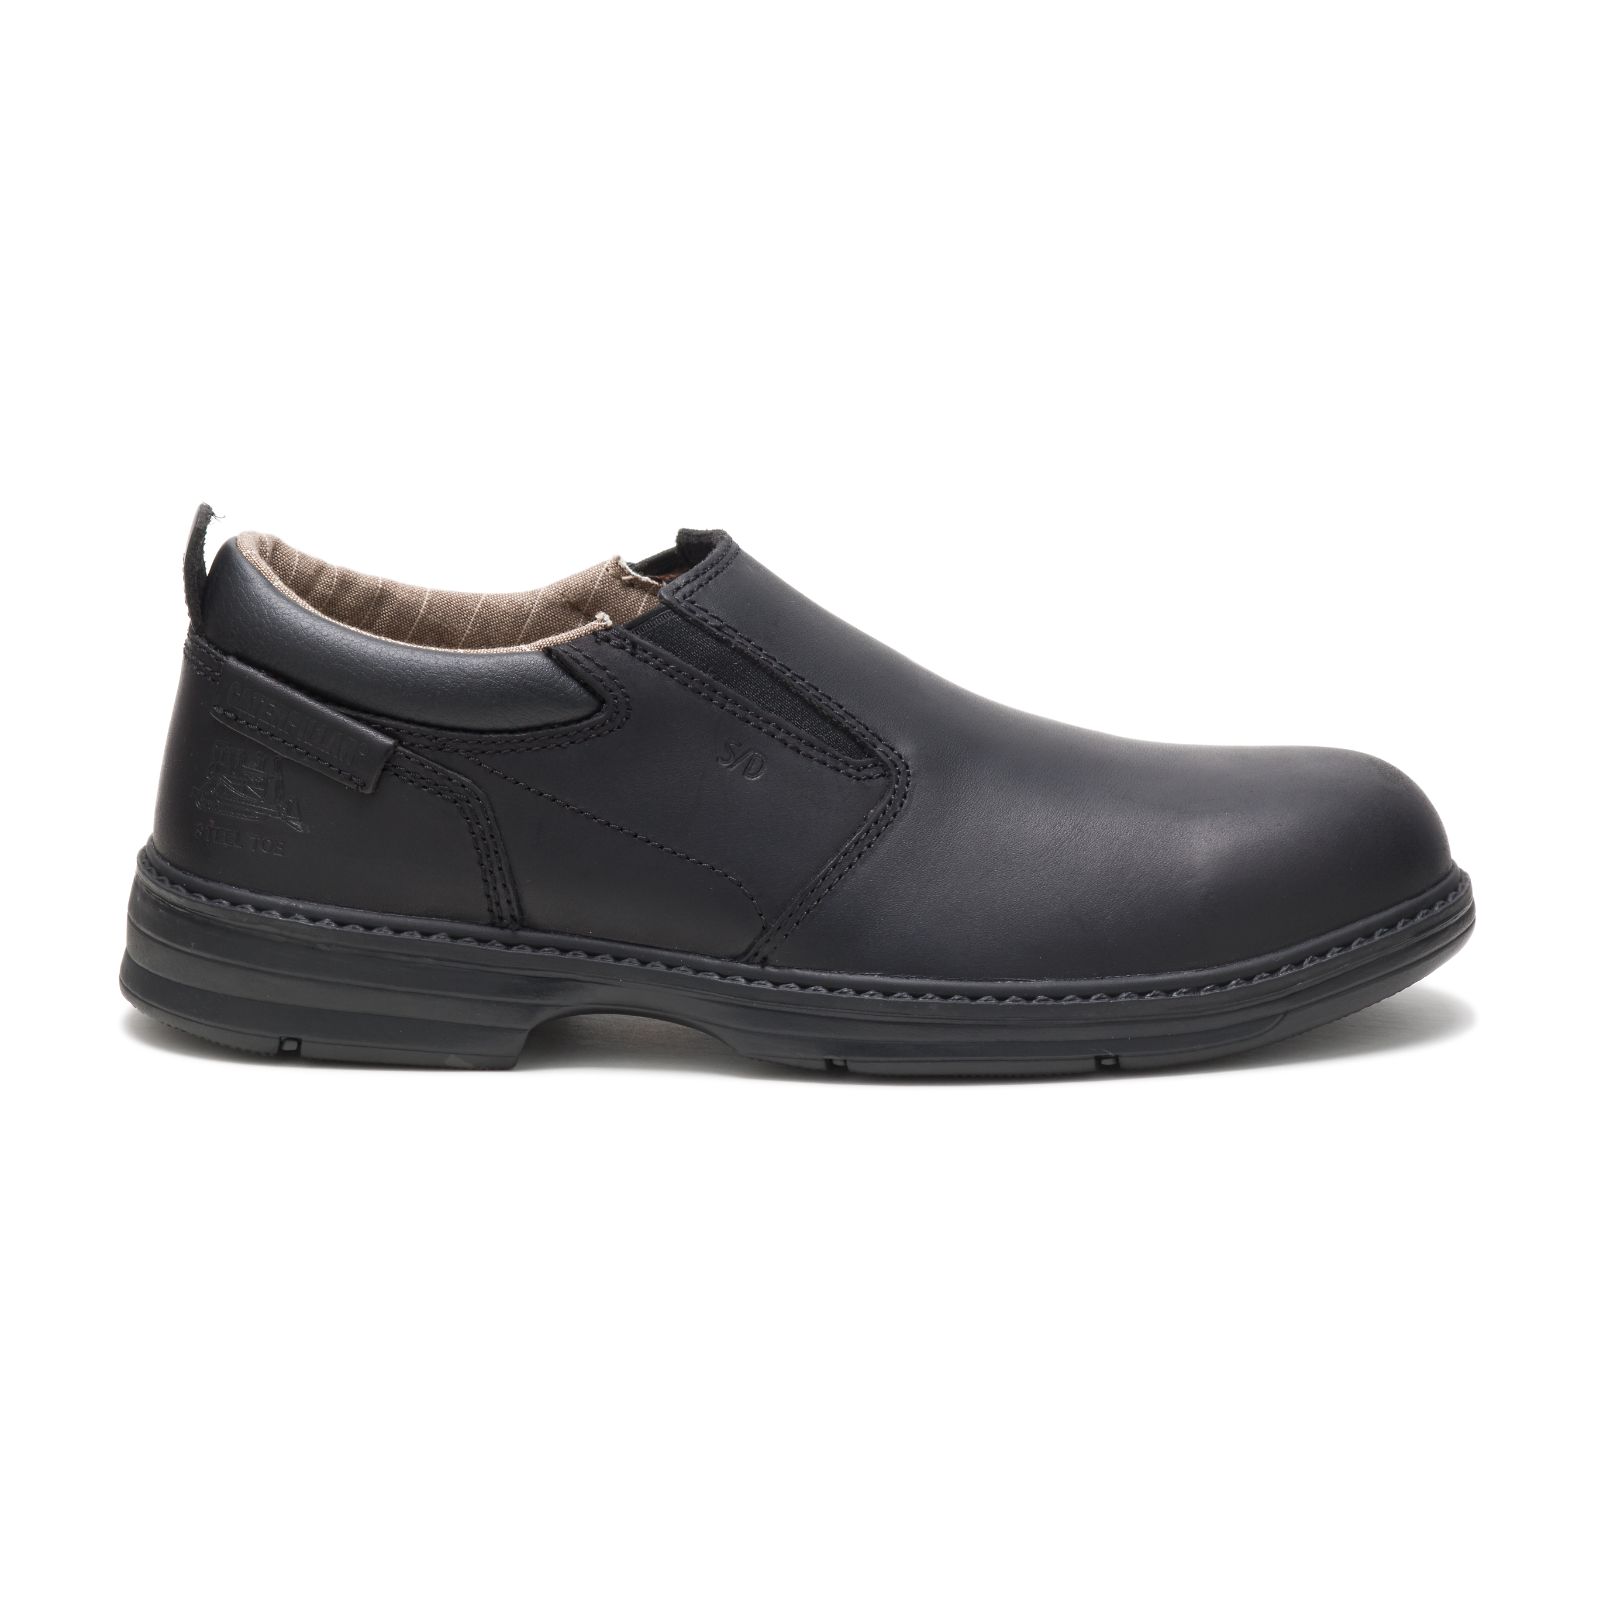 Caterpillar Work Shoes Dubai - Caterpillar Conclude Steel Toe Mens - Black JWGMRH079